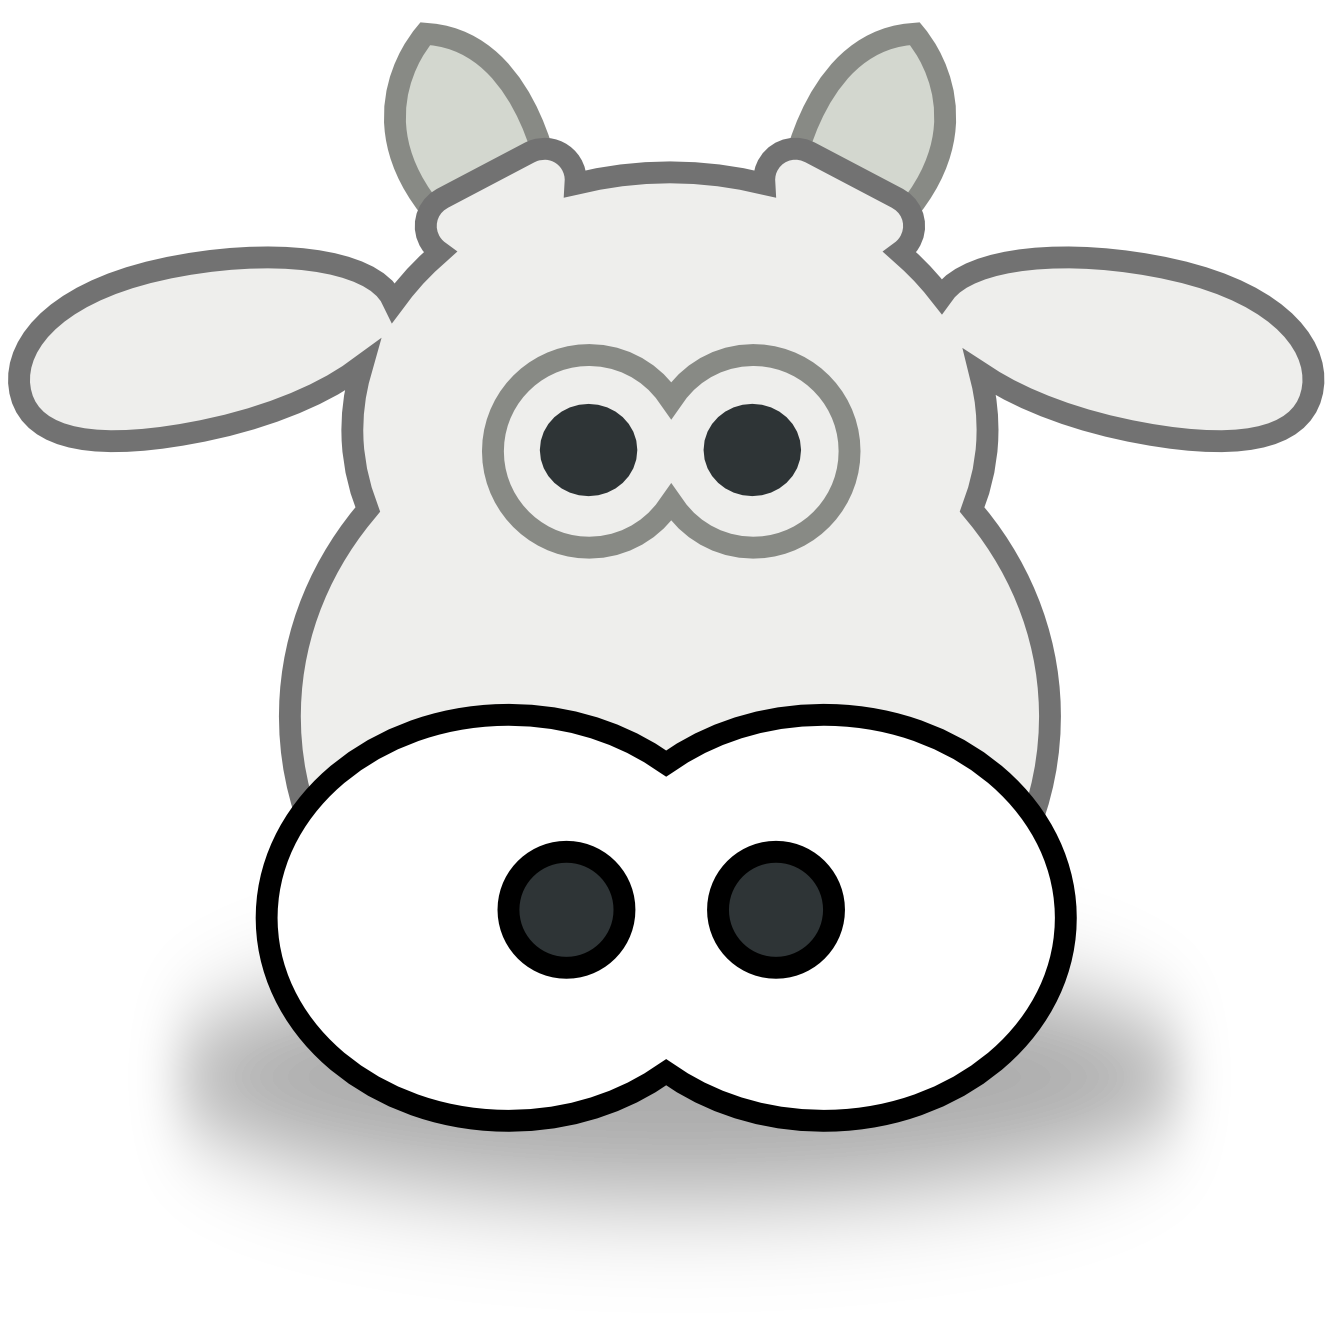 cow head clip art black and white